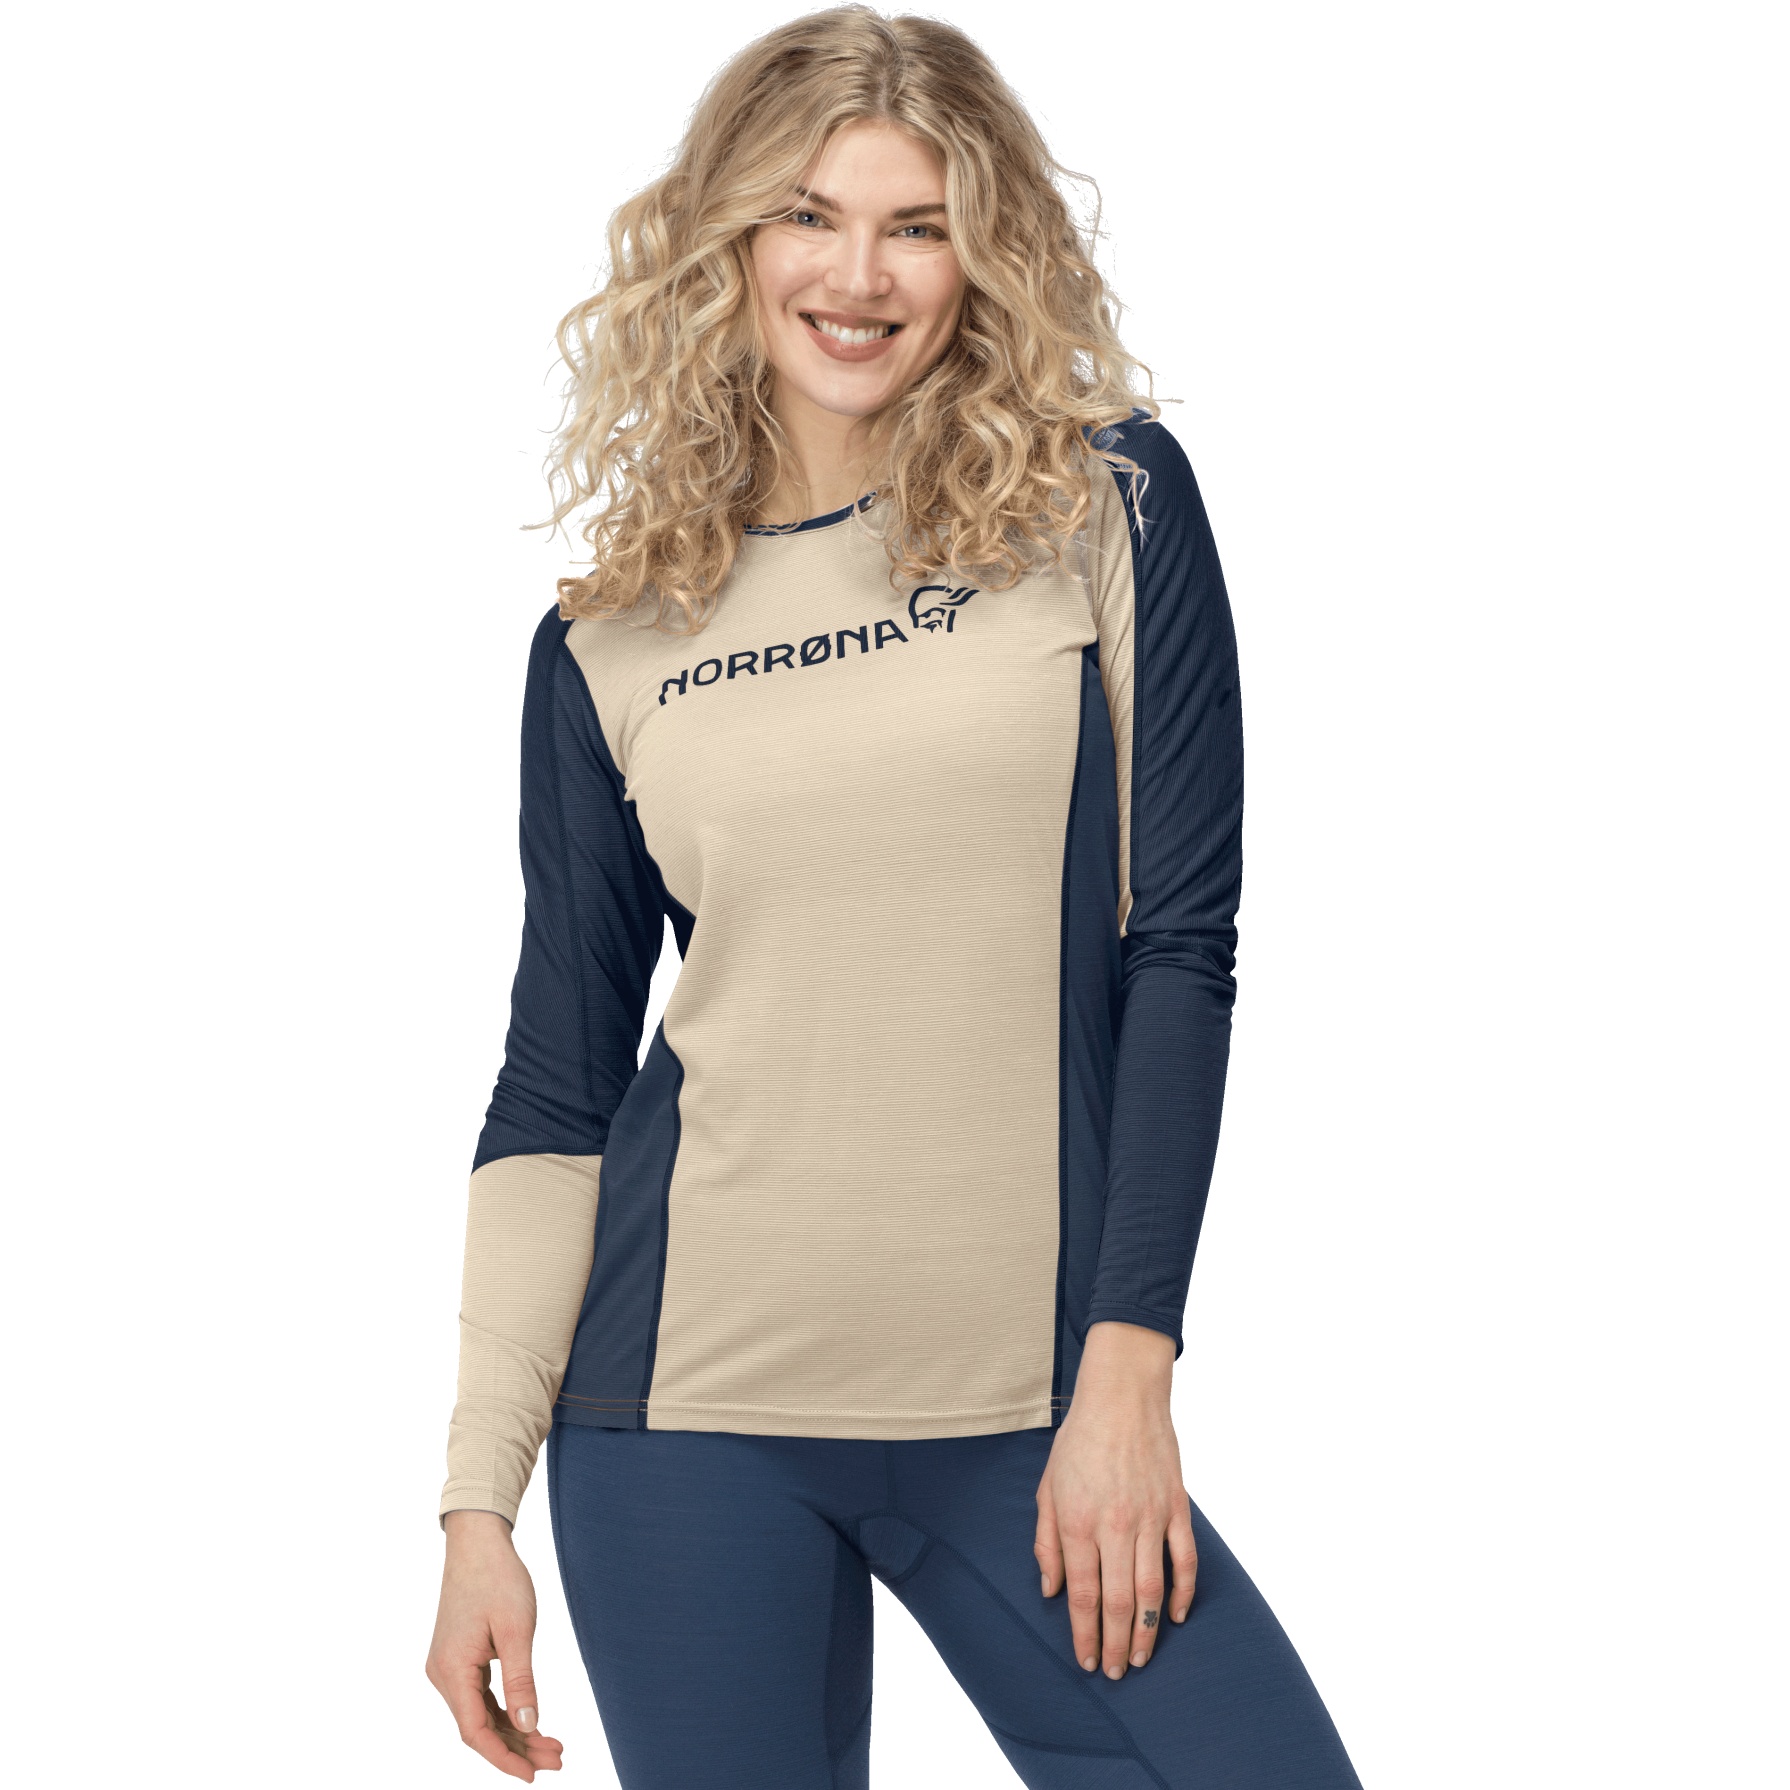 Picture of Norrona falketind equaliser merino round Neck Shirt Women - Pure Cashmere